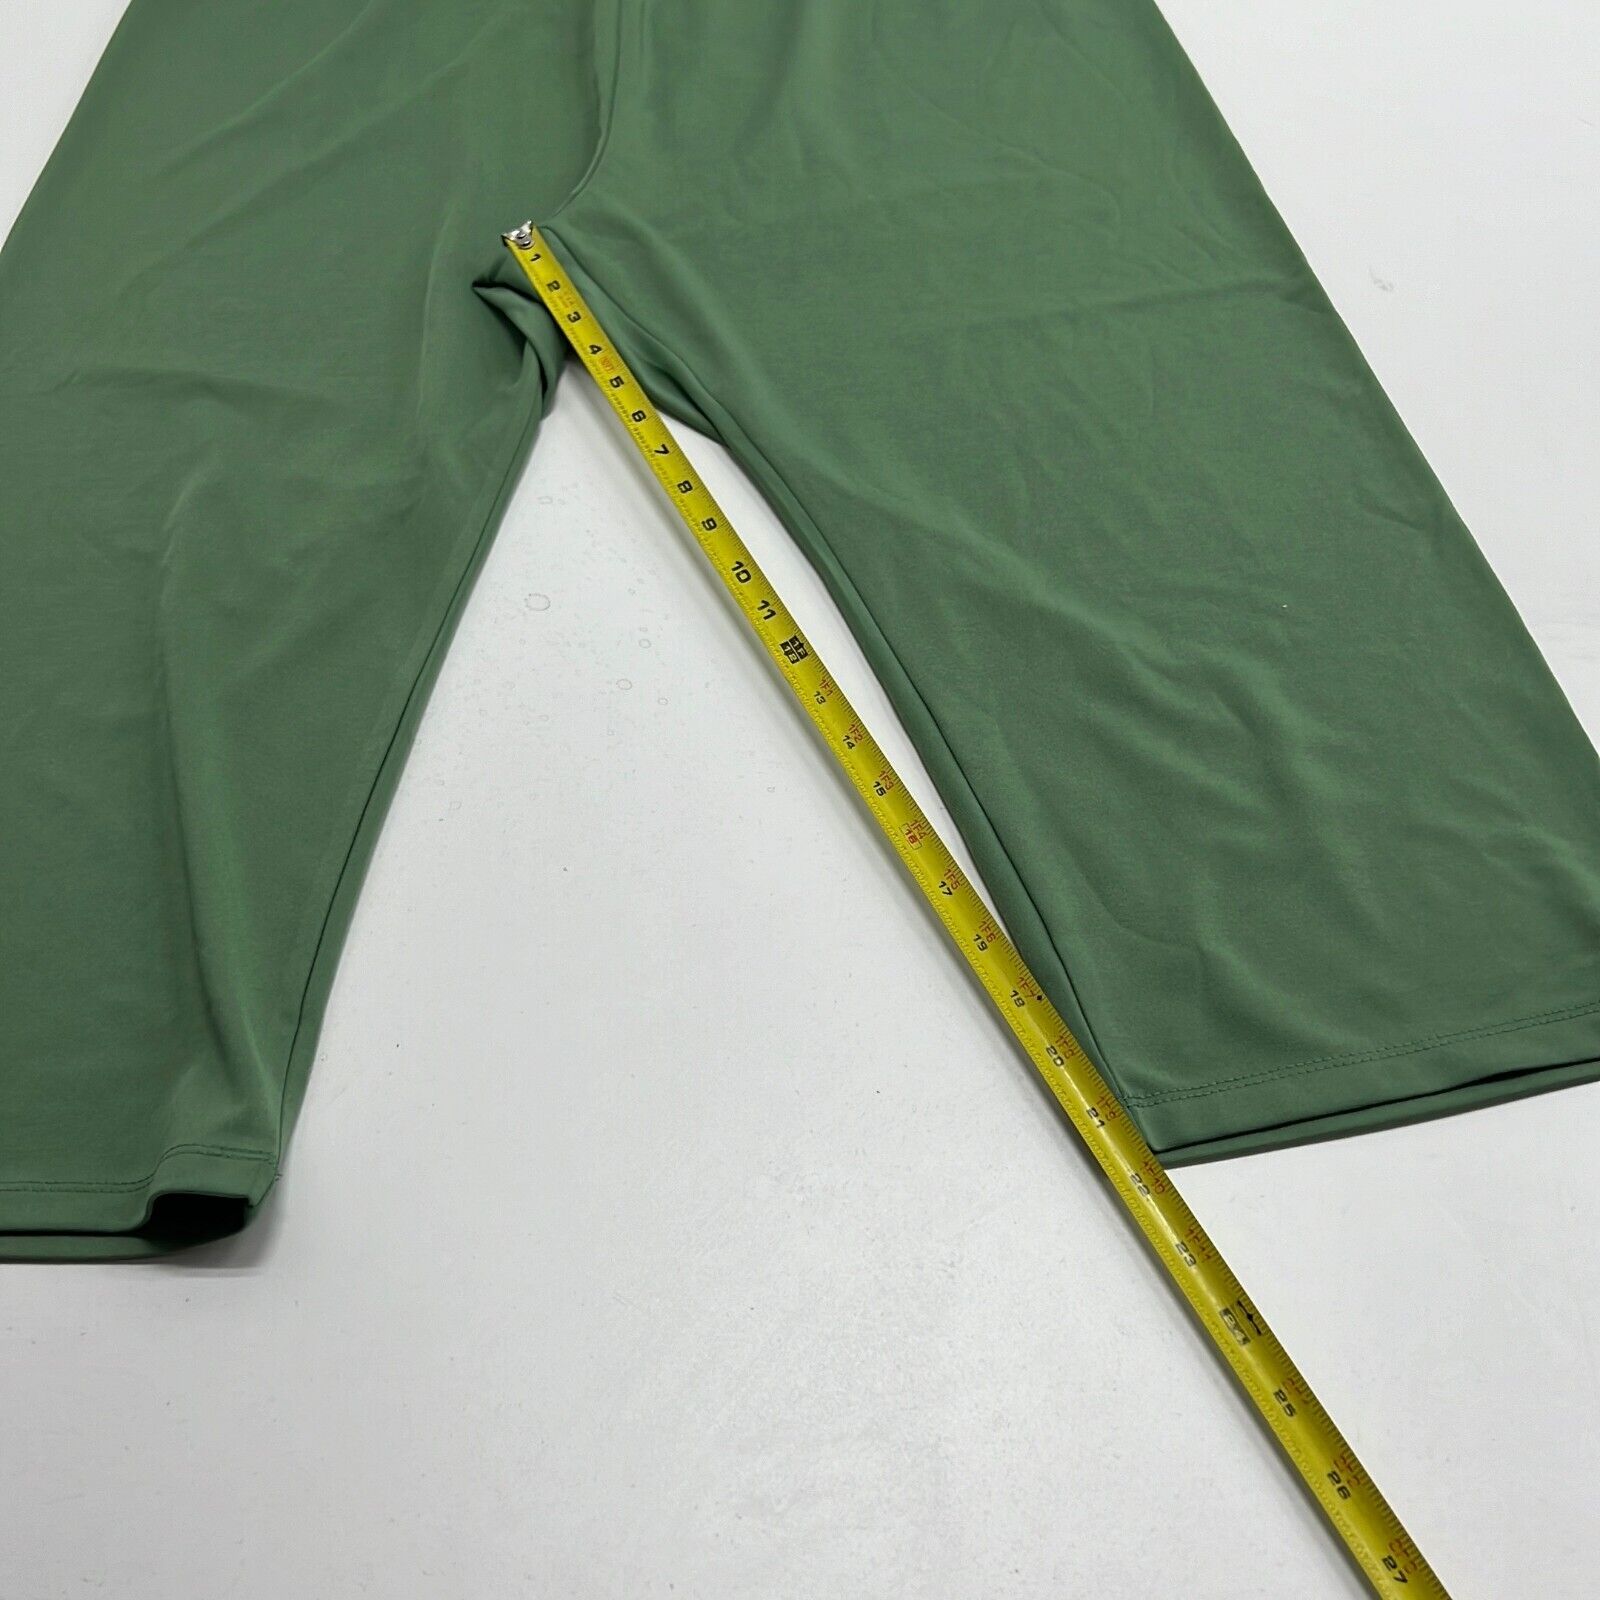 NWT One World Women's Green Flat Front Elastic Waist Pull On Capri Pants Size 3X